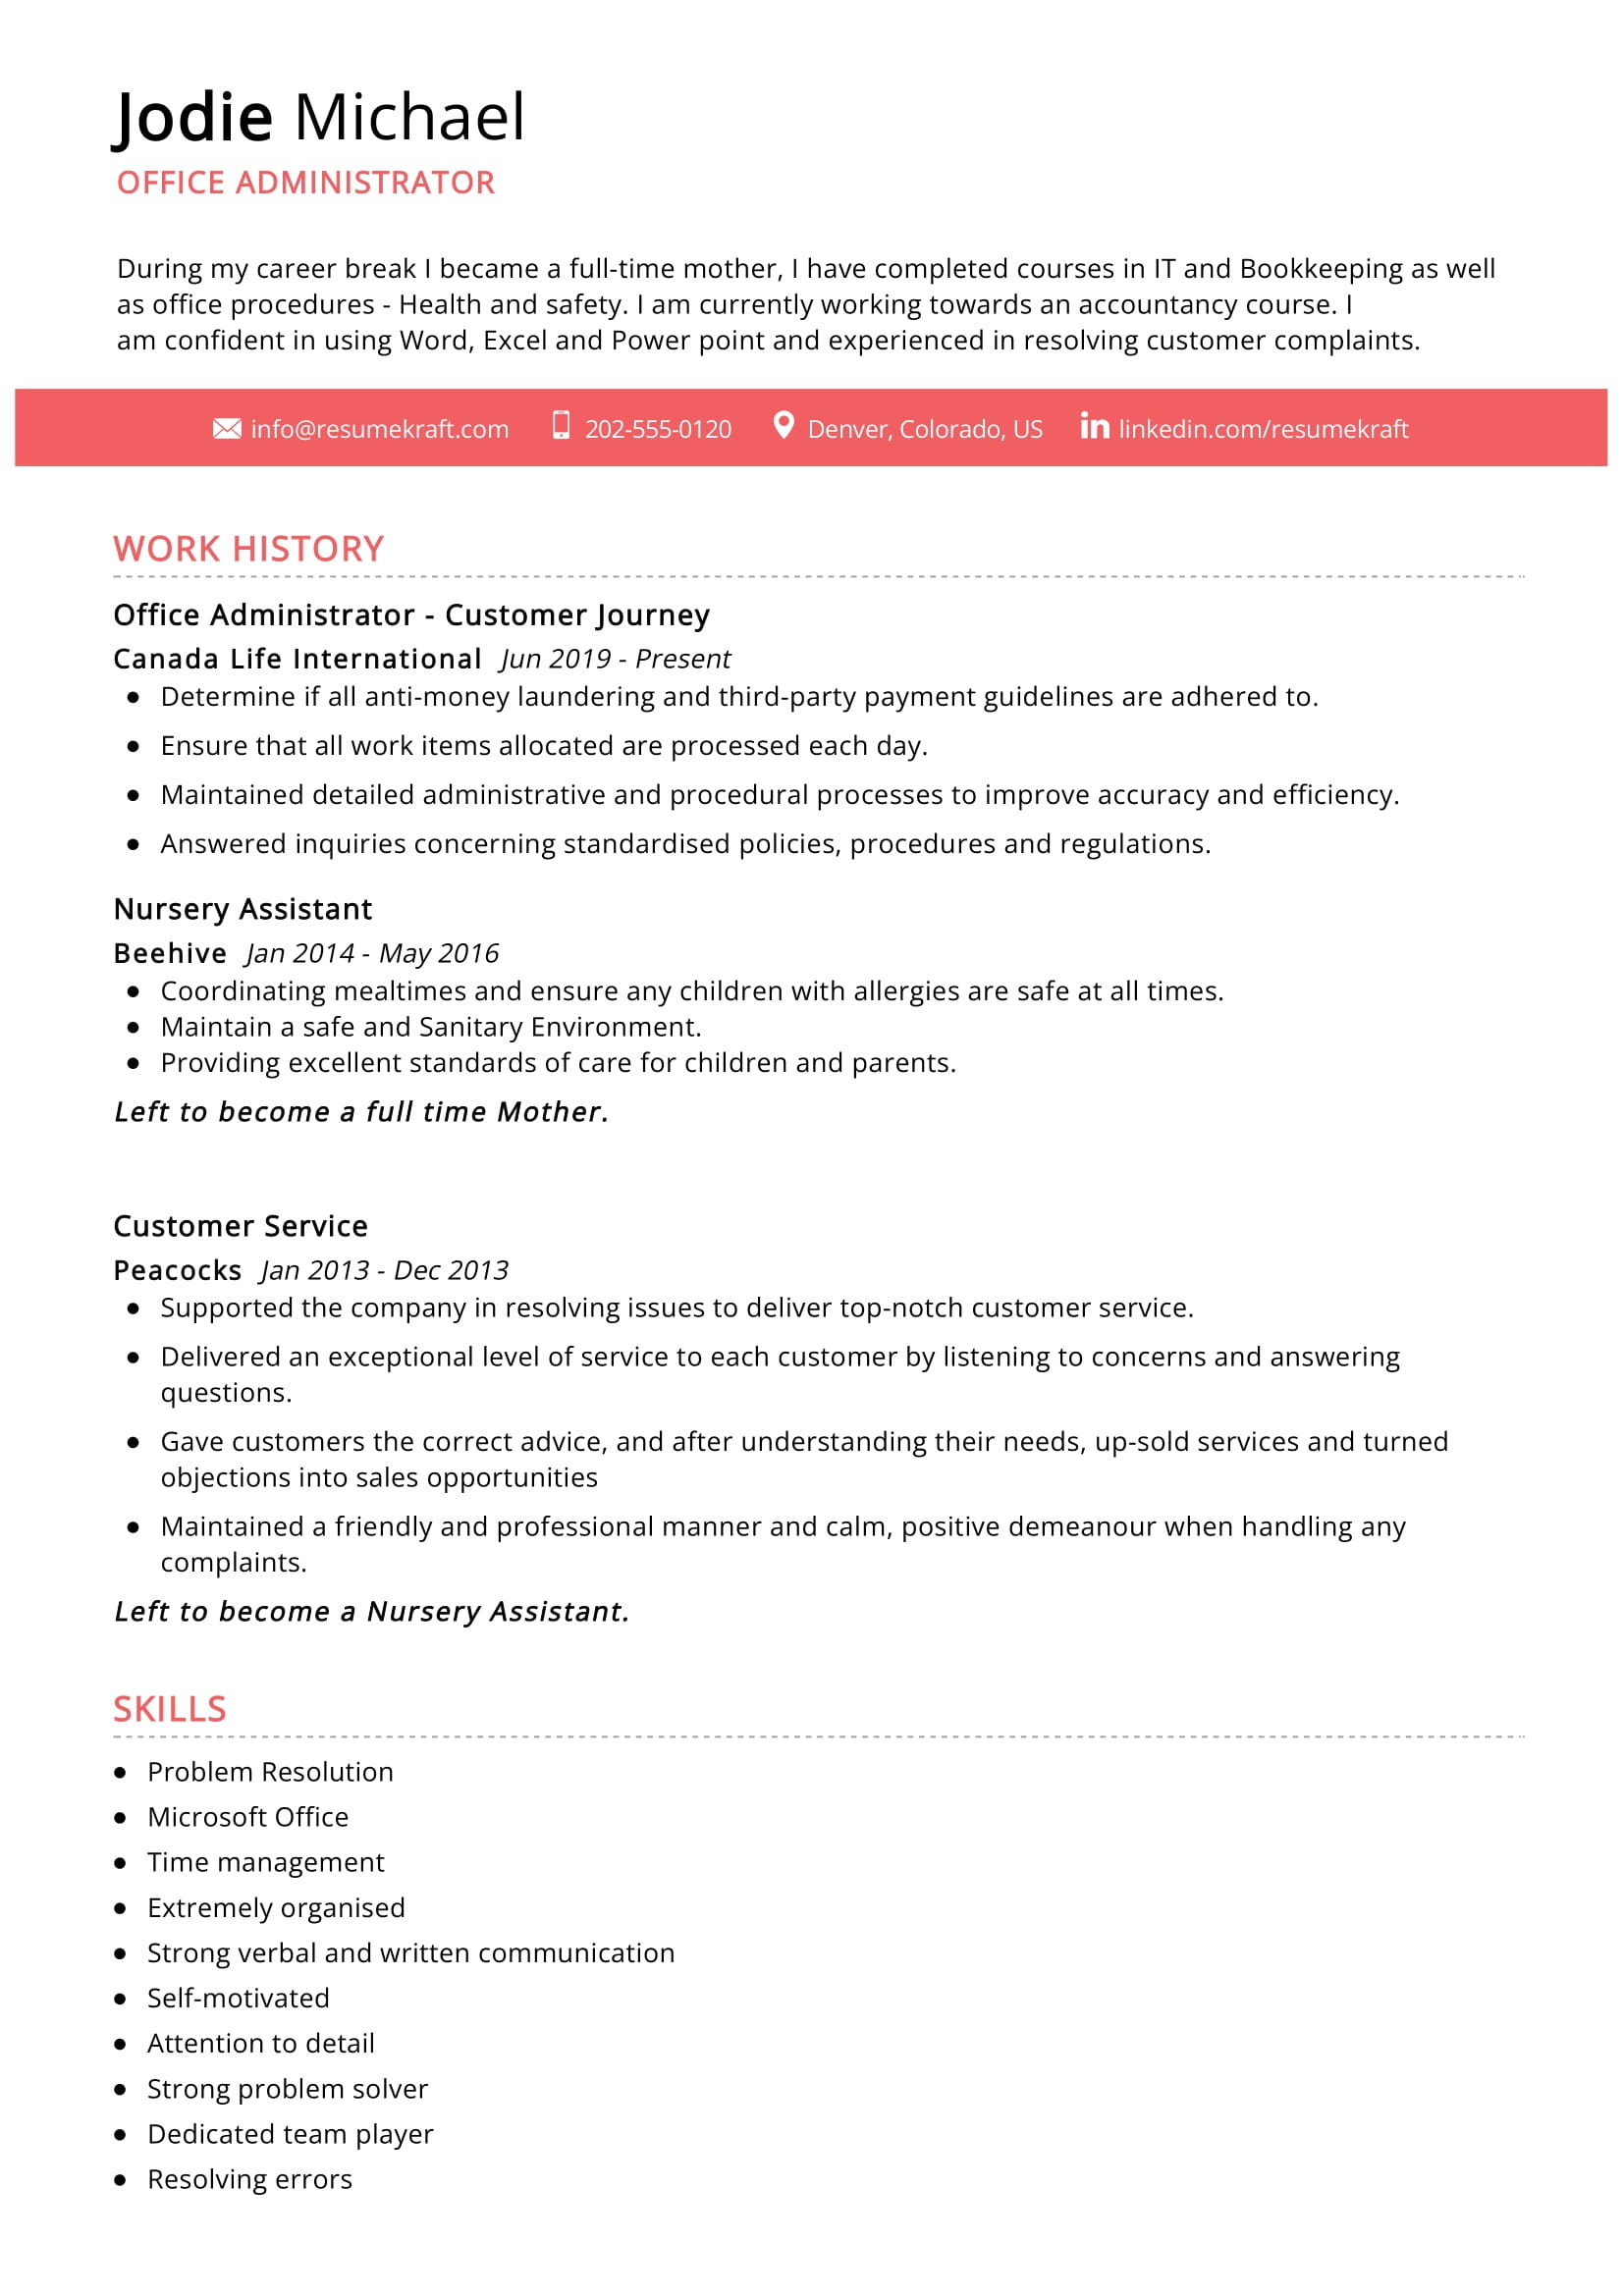 Sample Resume with Recent Career Break Office Administrator Resume Sample 2022 Writing Tips – Resumekraft